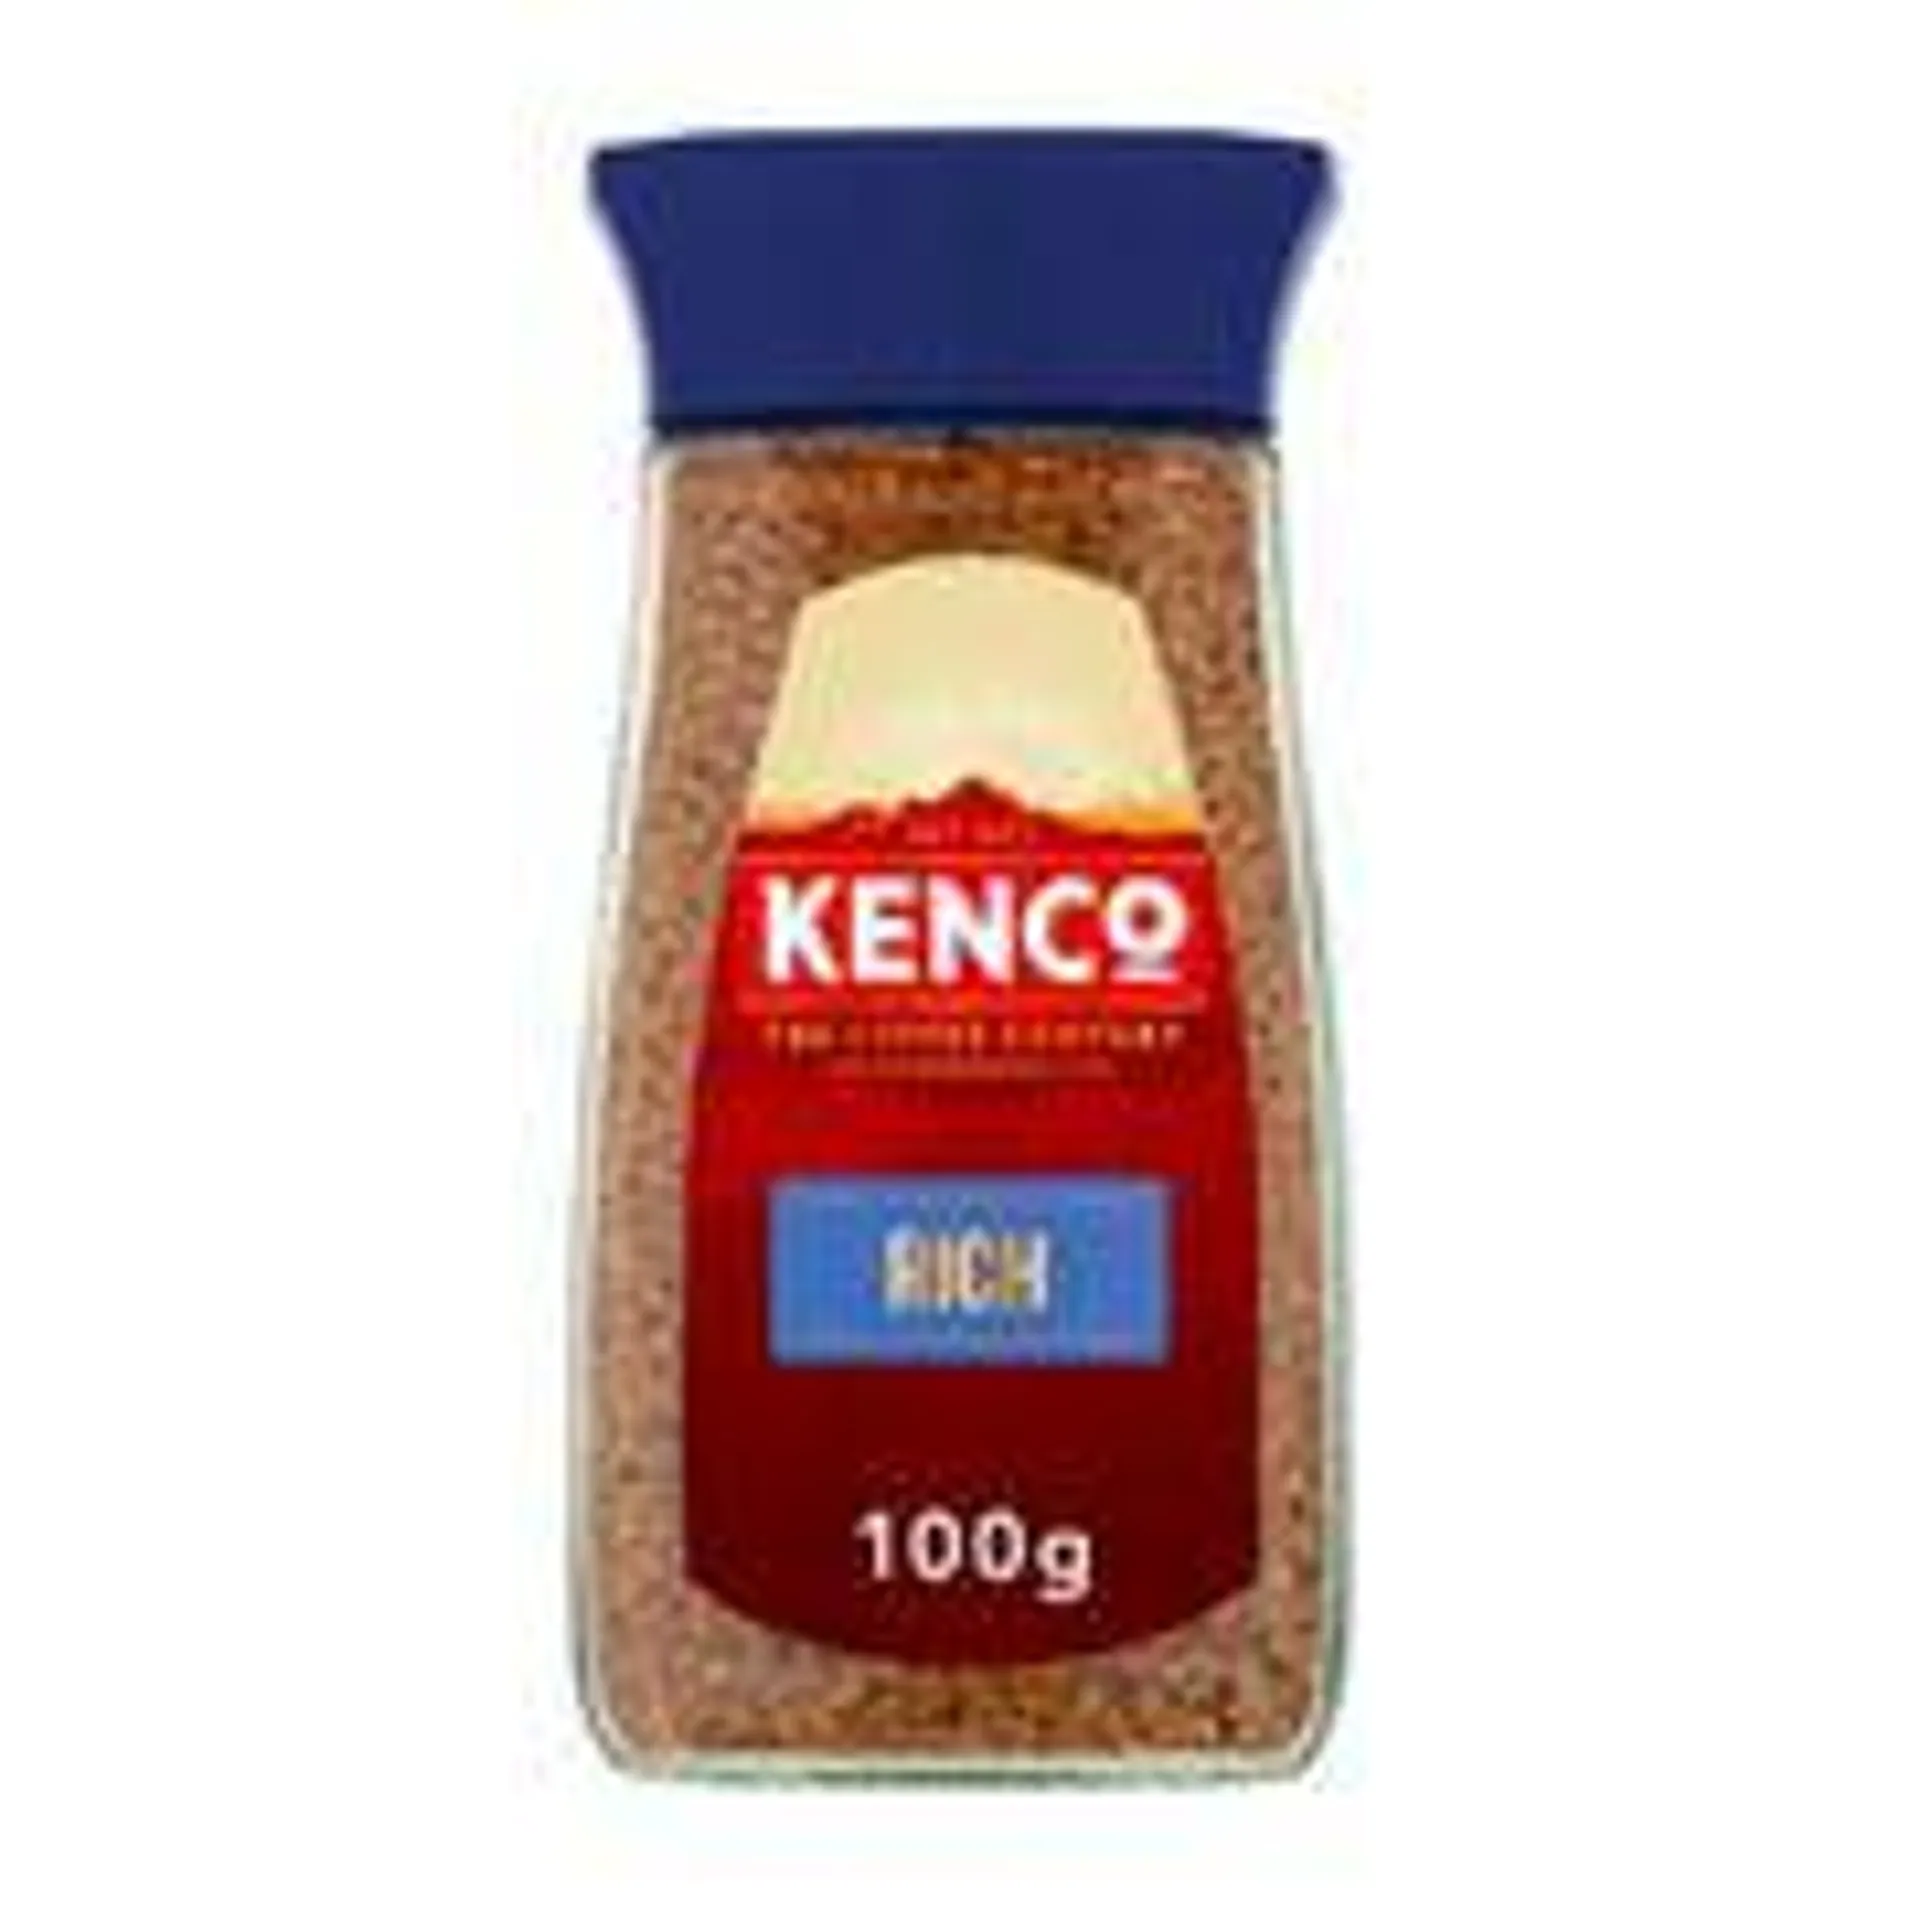 Kenco Rich Instant Coffee, 100g